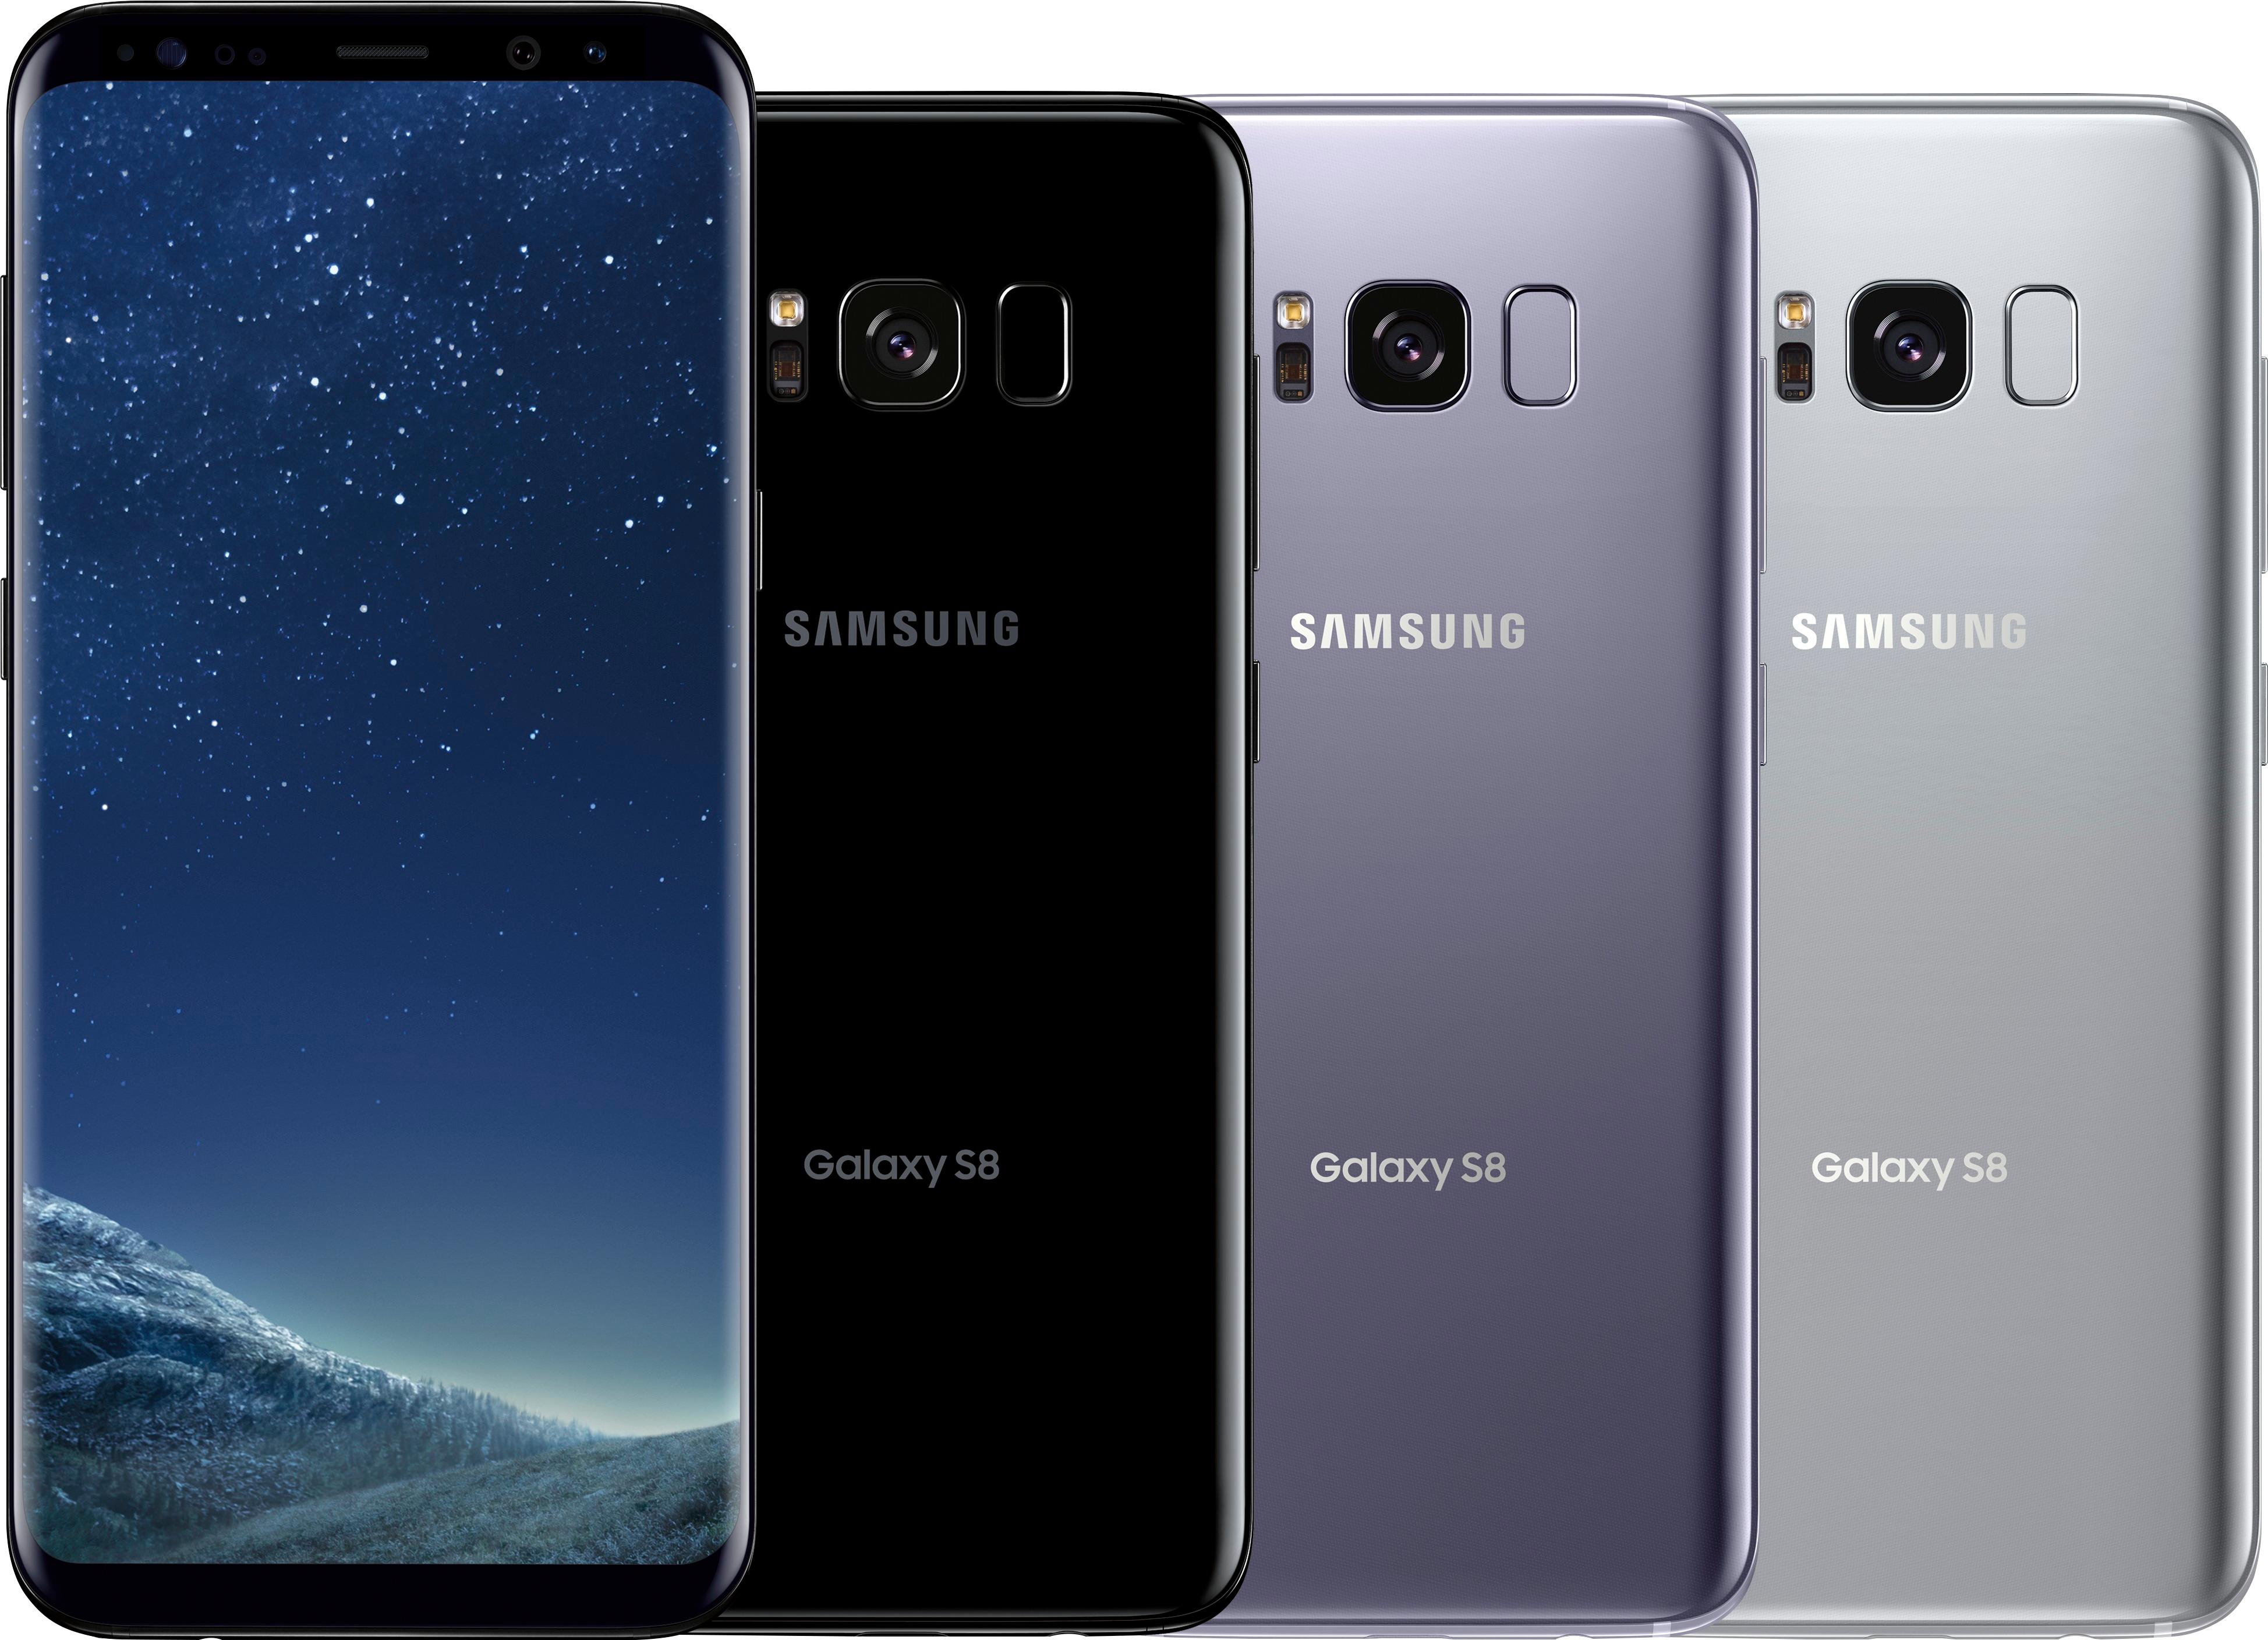 Samsung s9 wifi. Samsung g950f Galaxy s8. Samsung g950 Galaxy s8. Samsung Galaxy s8 Plus. Samsung Galaxy s8 SM-g9500.